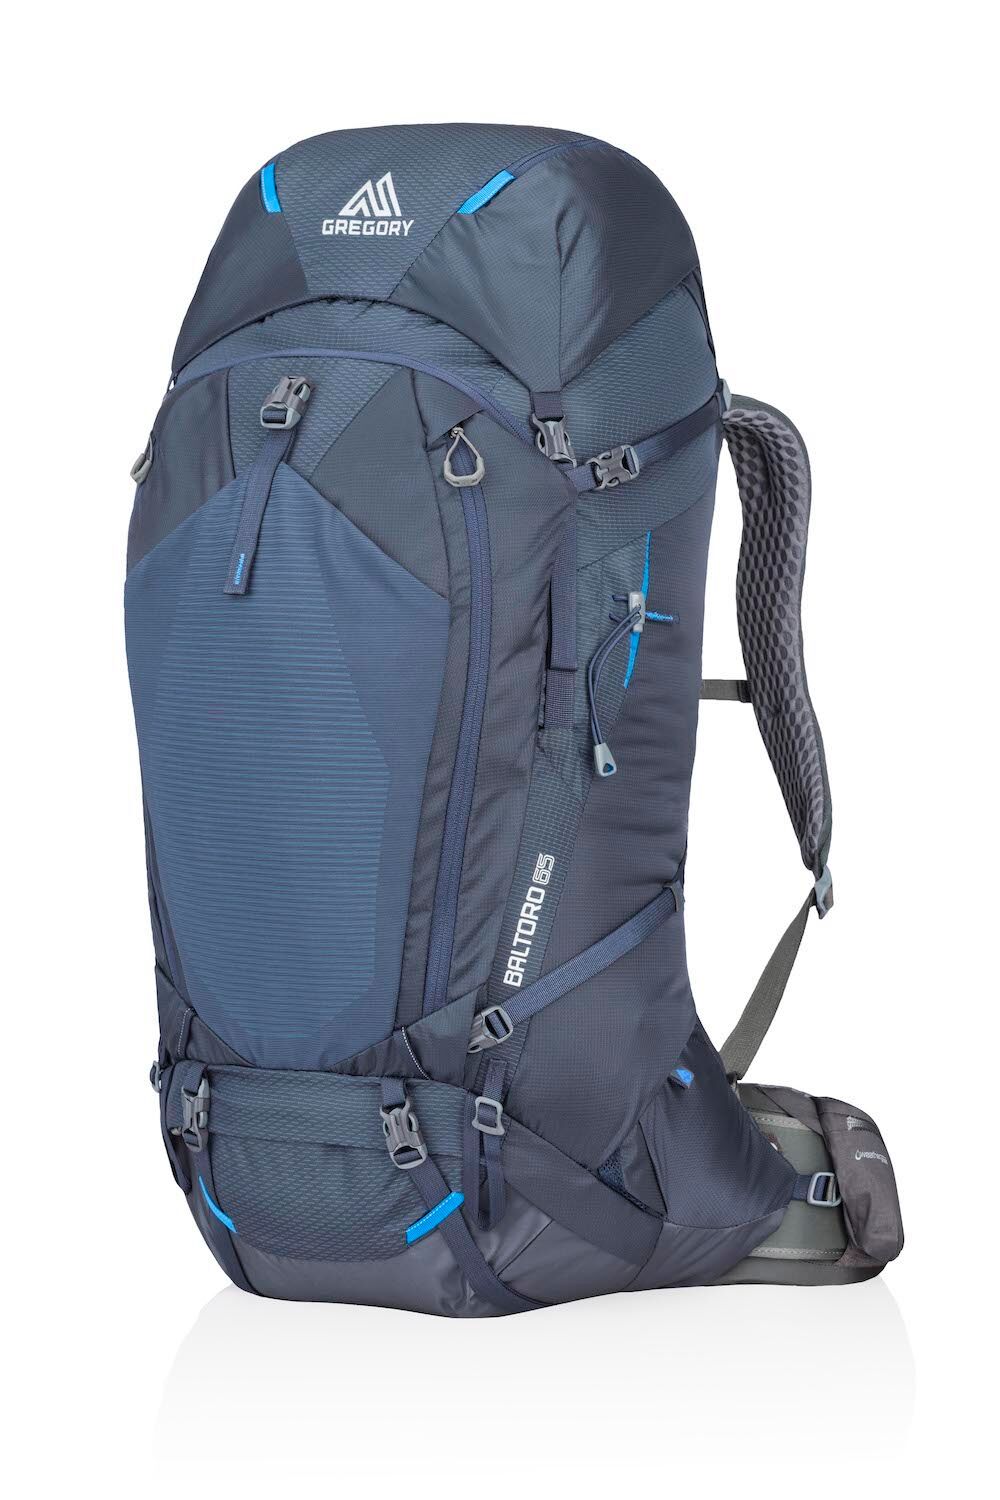 Gregory Baltoro 65 - Hiking backpack - Men's